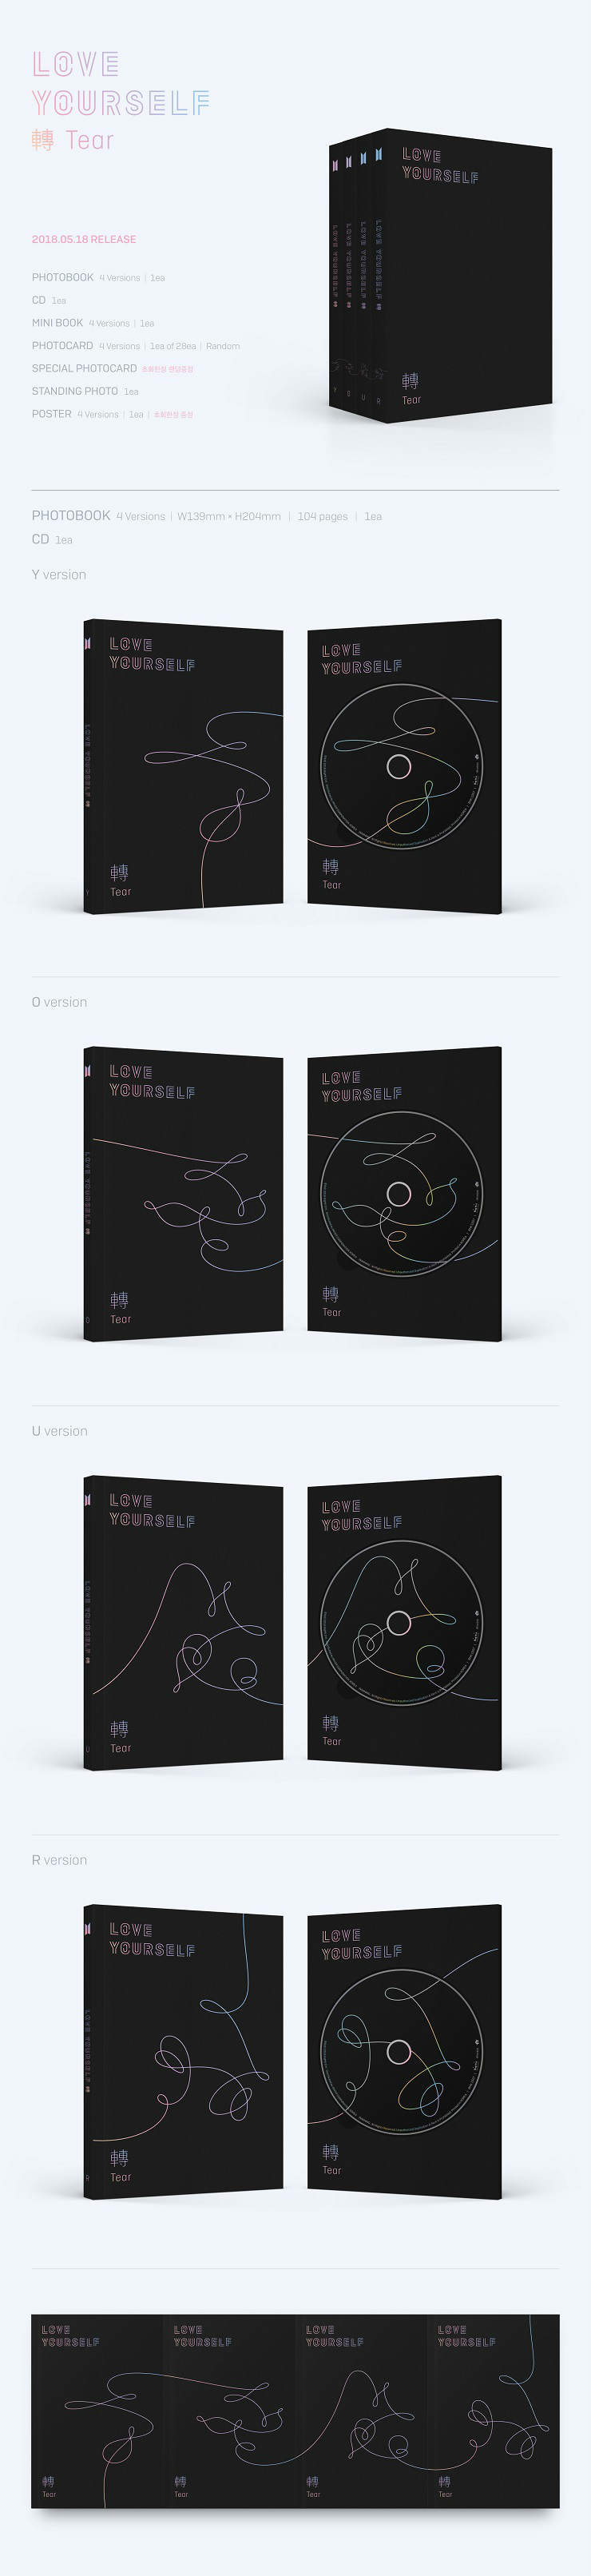 BTS: Love Yourself 轉 'Tear' Album Review